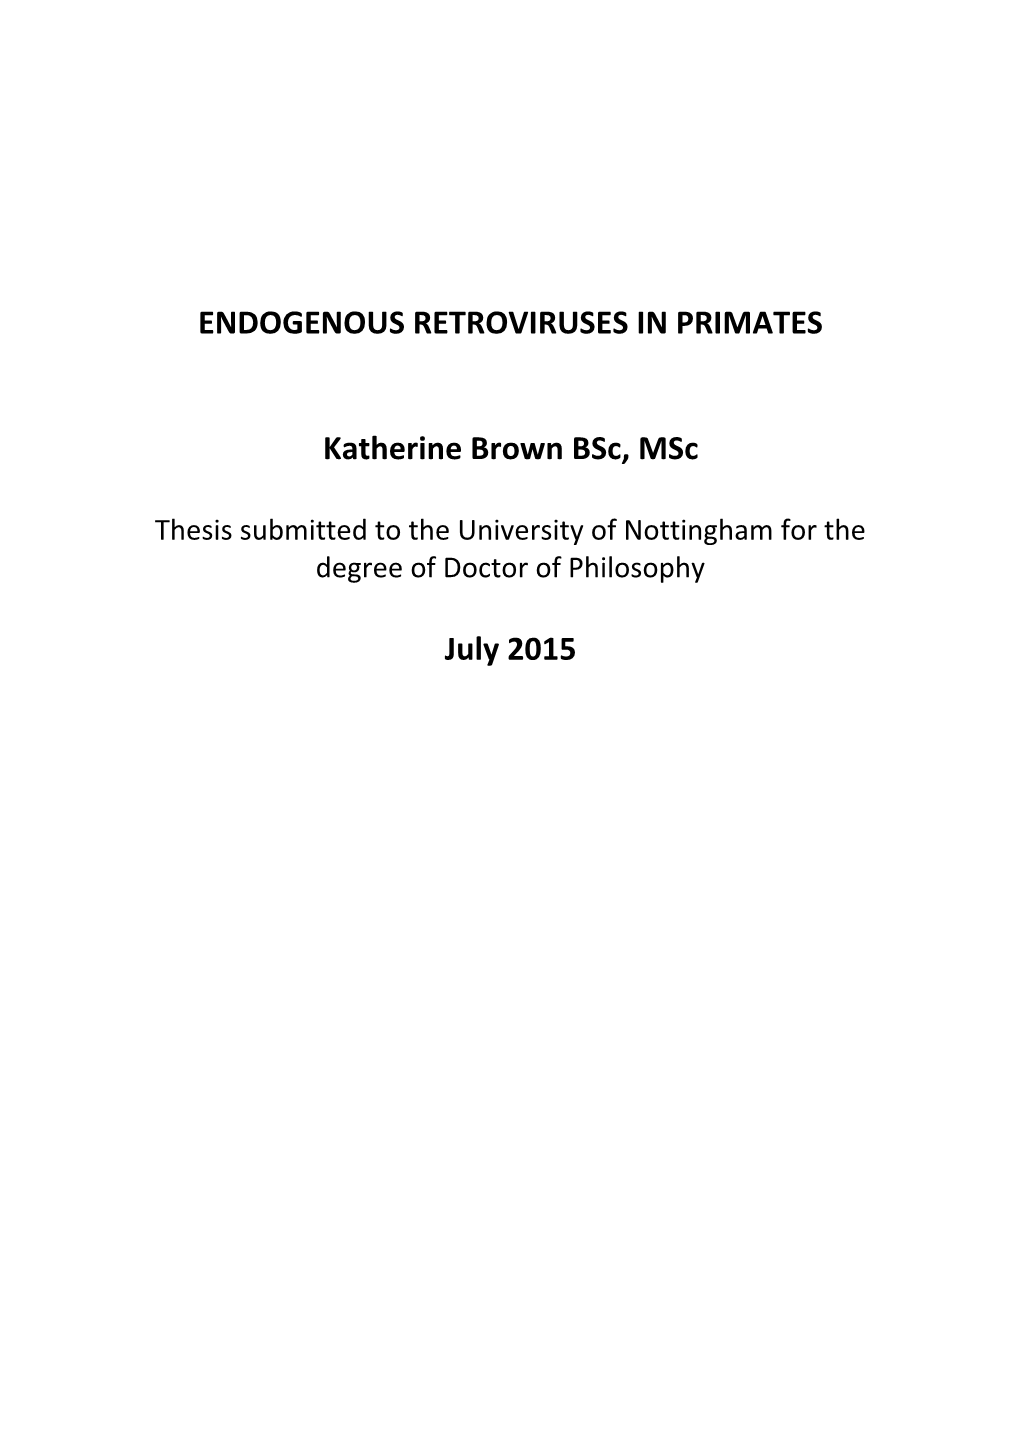 ENDOGENOUS RETROVIRUSES in PRIMATES Katherine Brown Bsc